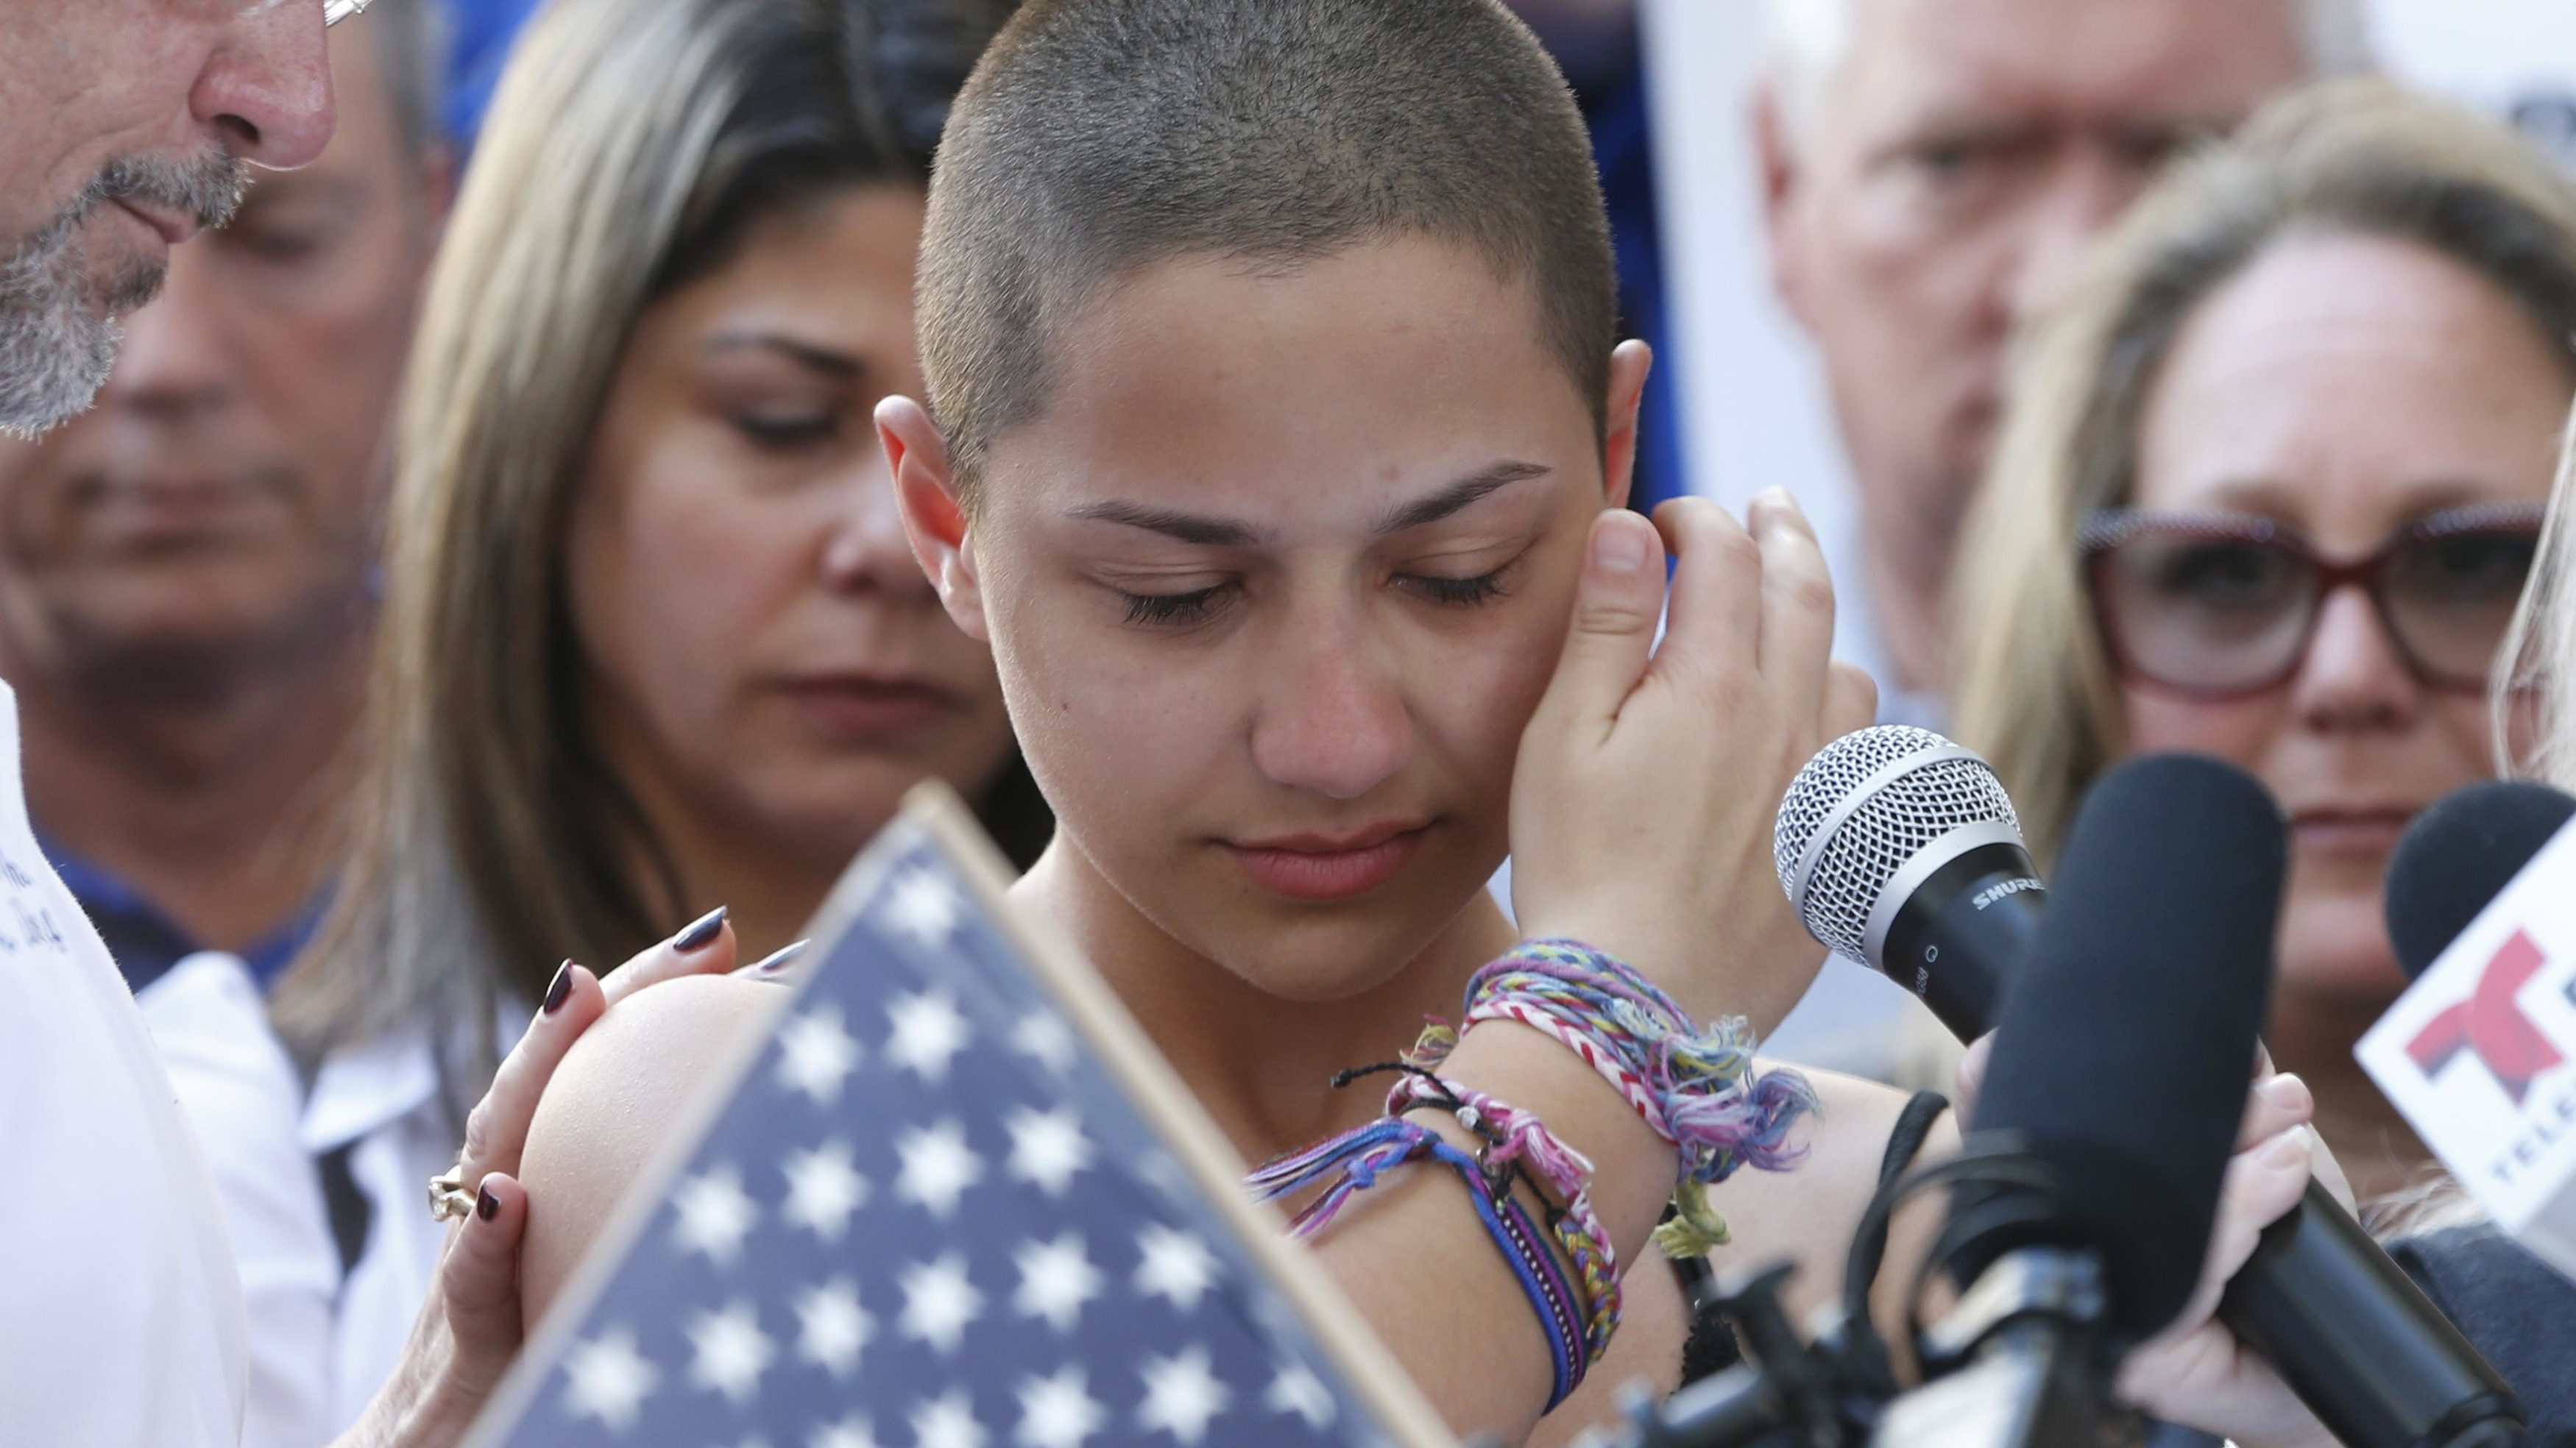 Emma González, a Parkland shooting survivor, called out President Trump on gun reform at a rally